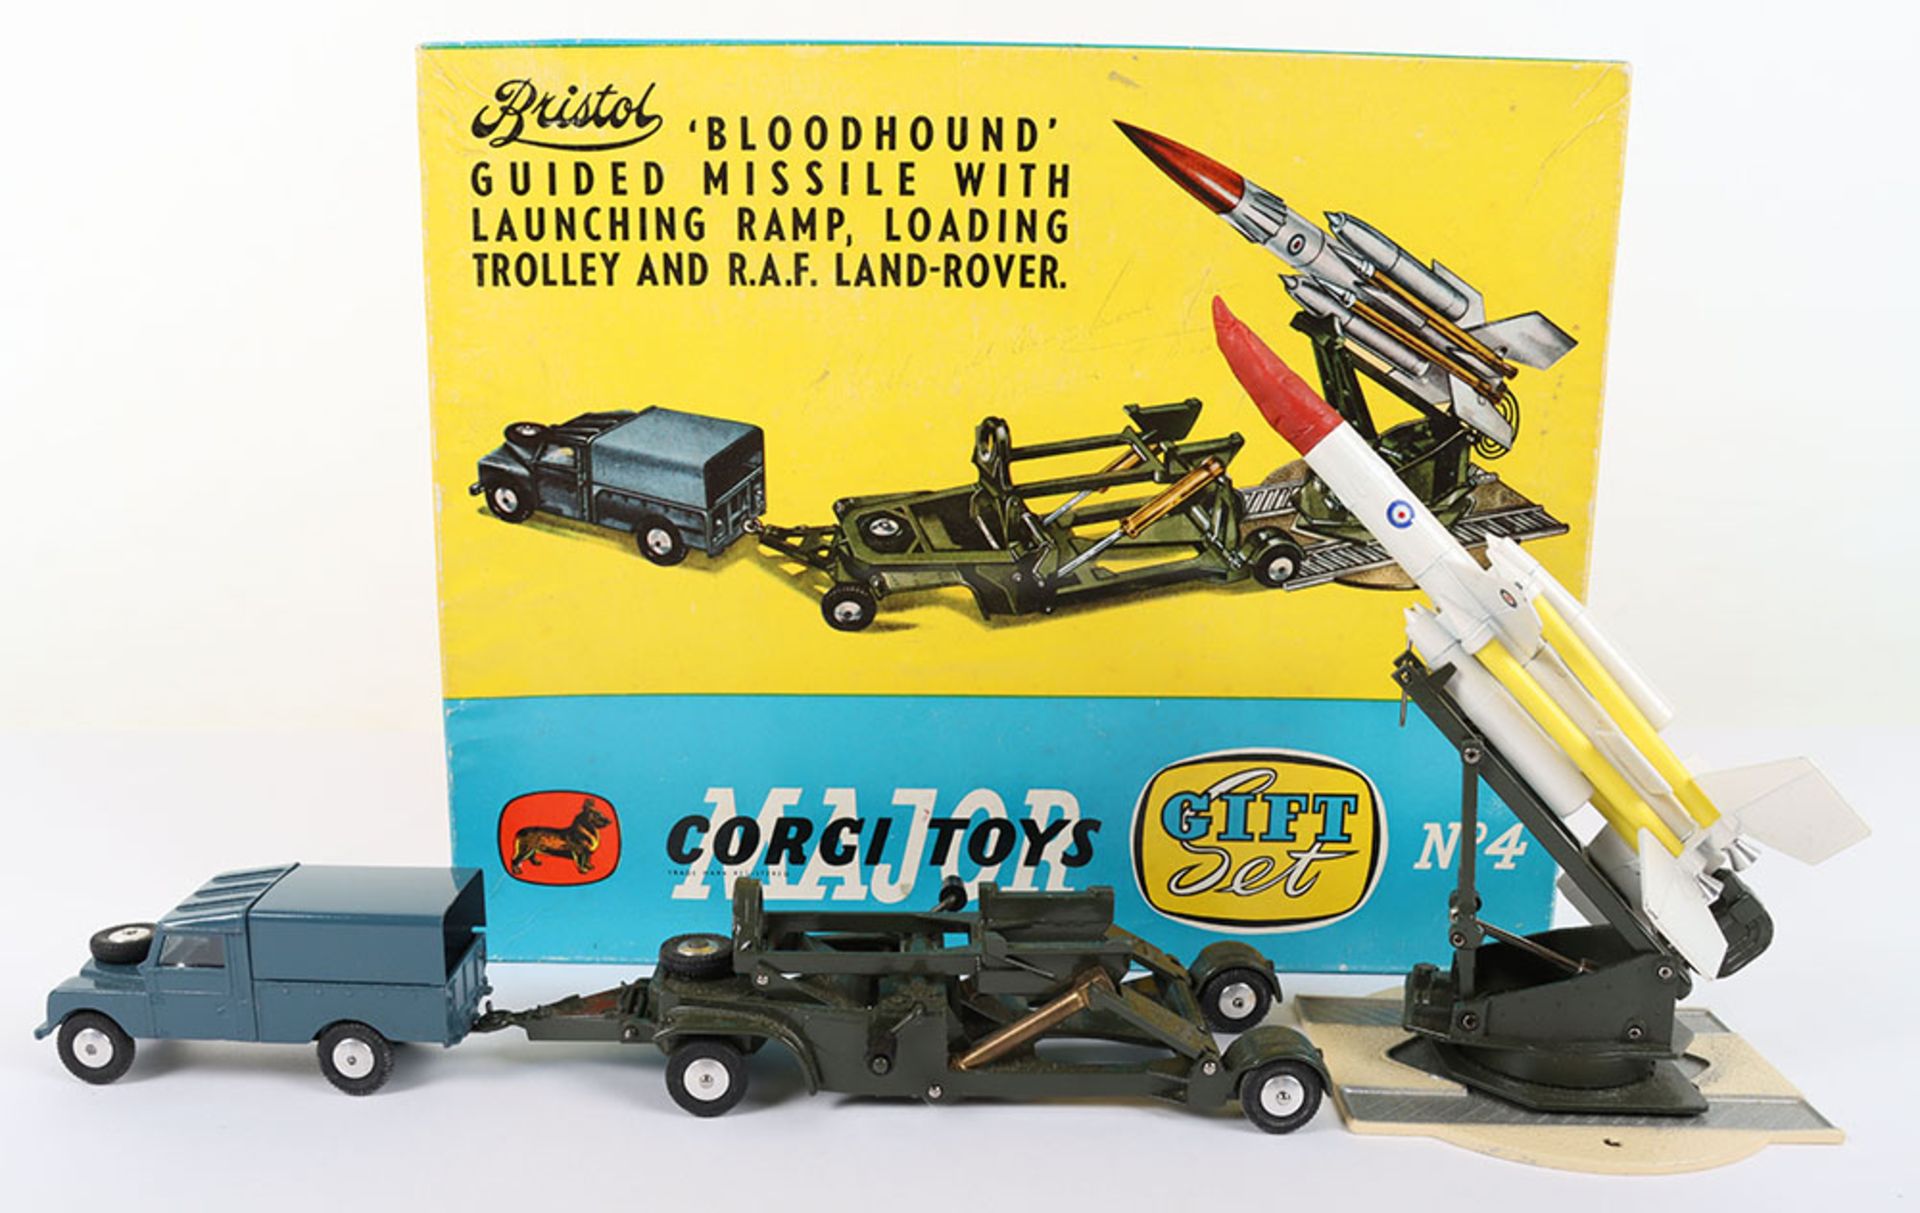 Corgi Major Toys Gift Set No 4 Bristol ‘Bloodhound’ guided missile with launching Ramp - Bild 2 aus 5